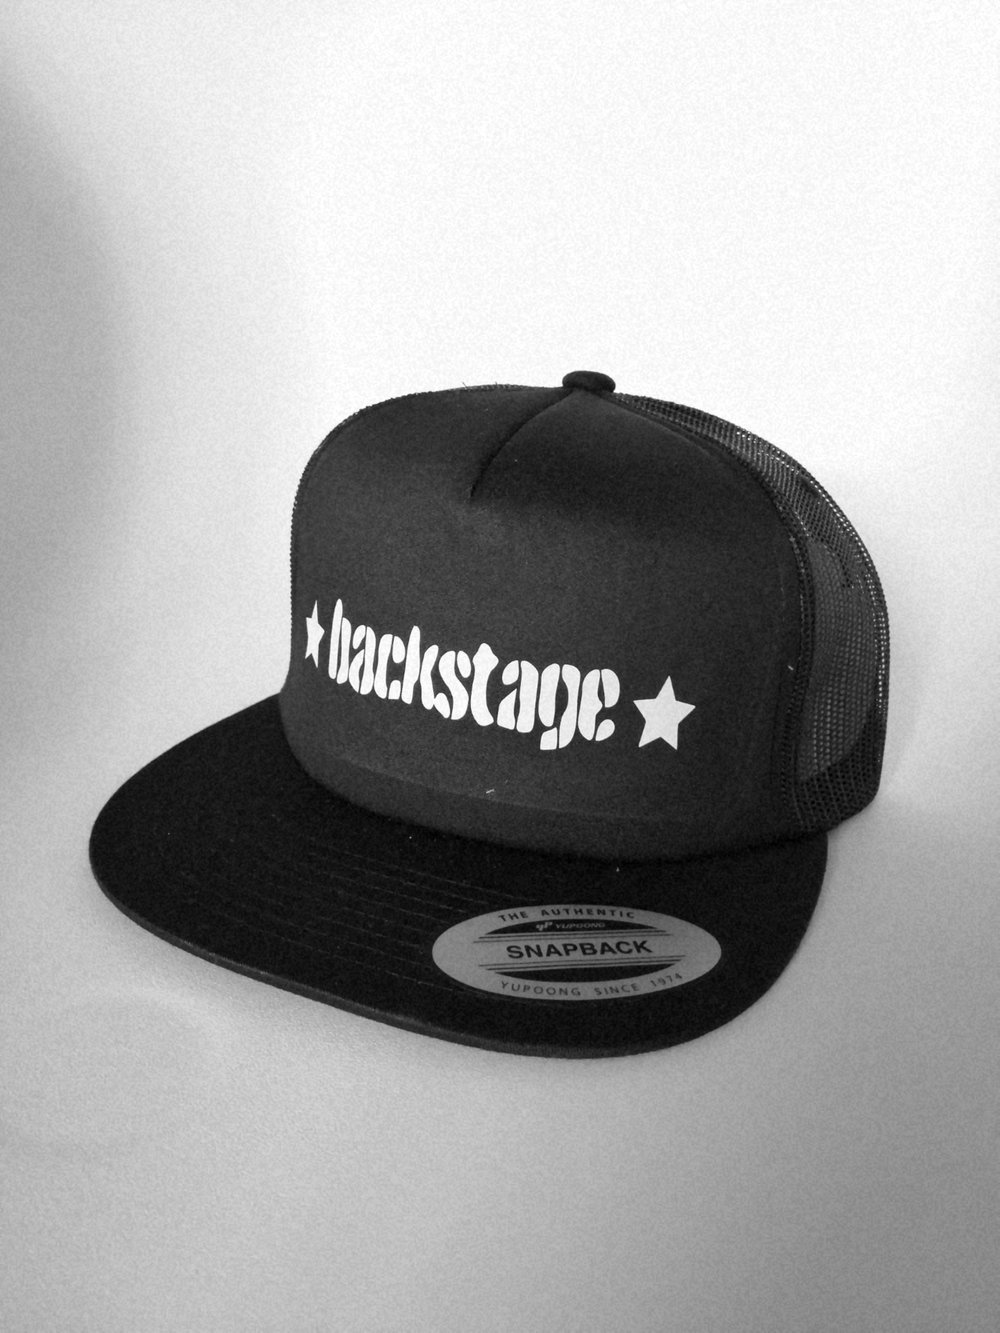 BACKSTAGE Logo Trucker Hat